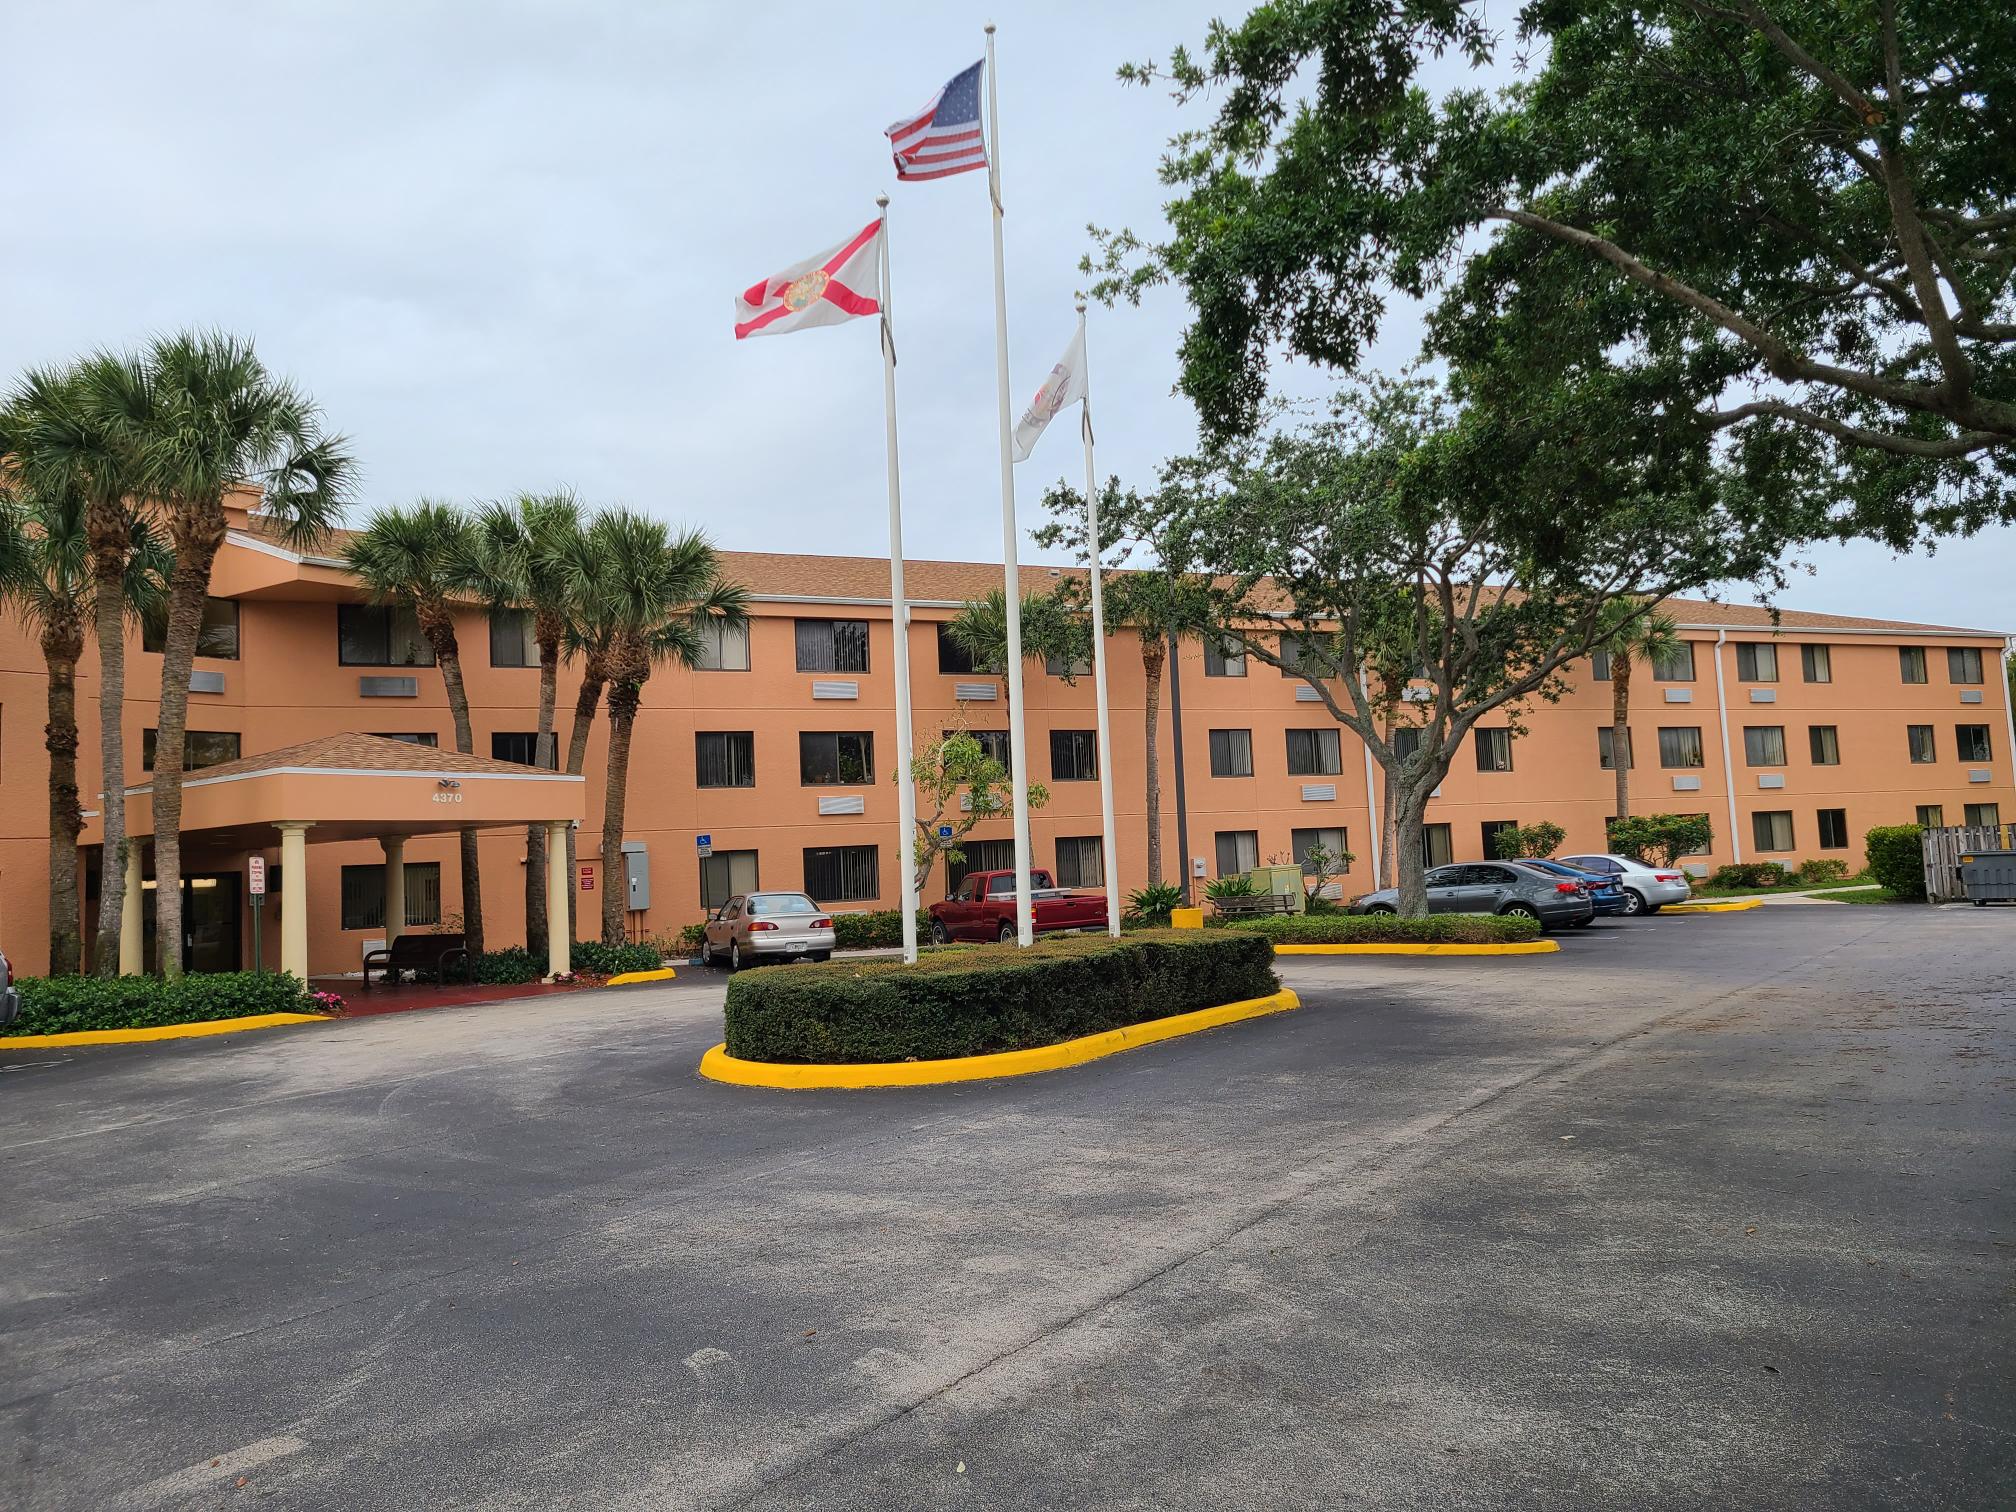 AHEPA Management Acquires Second Florida Property